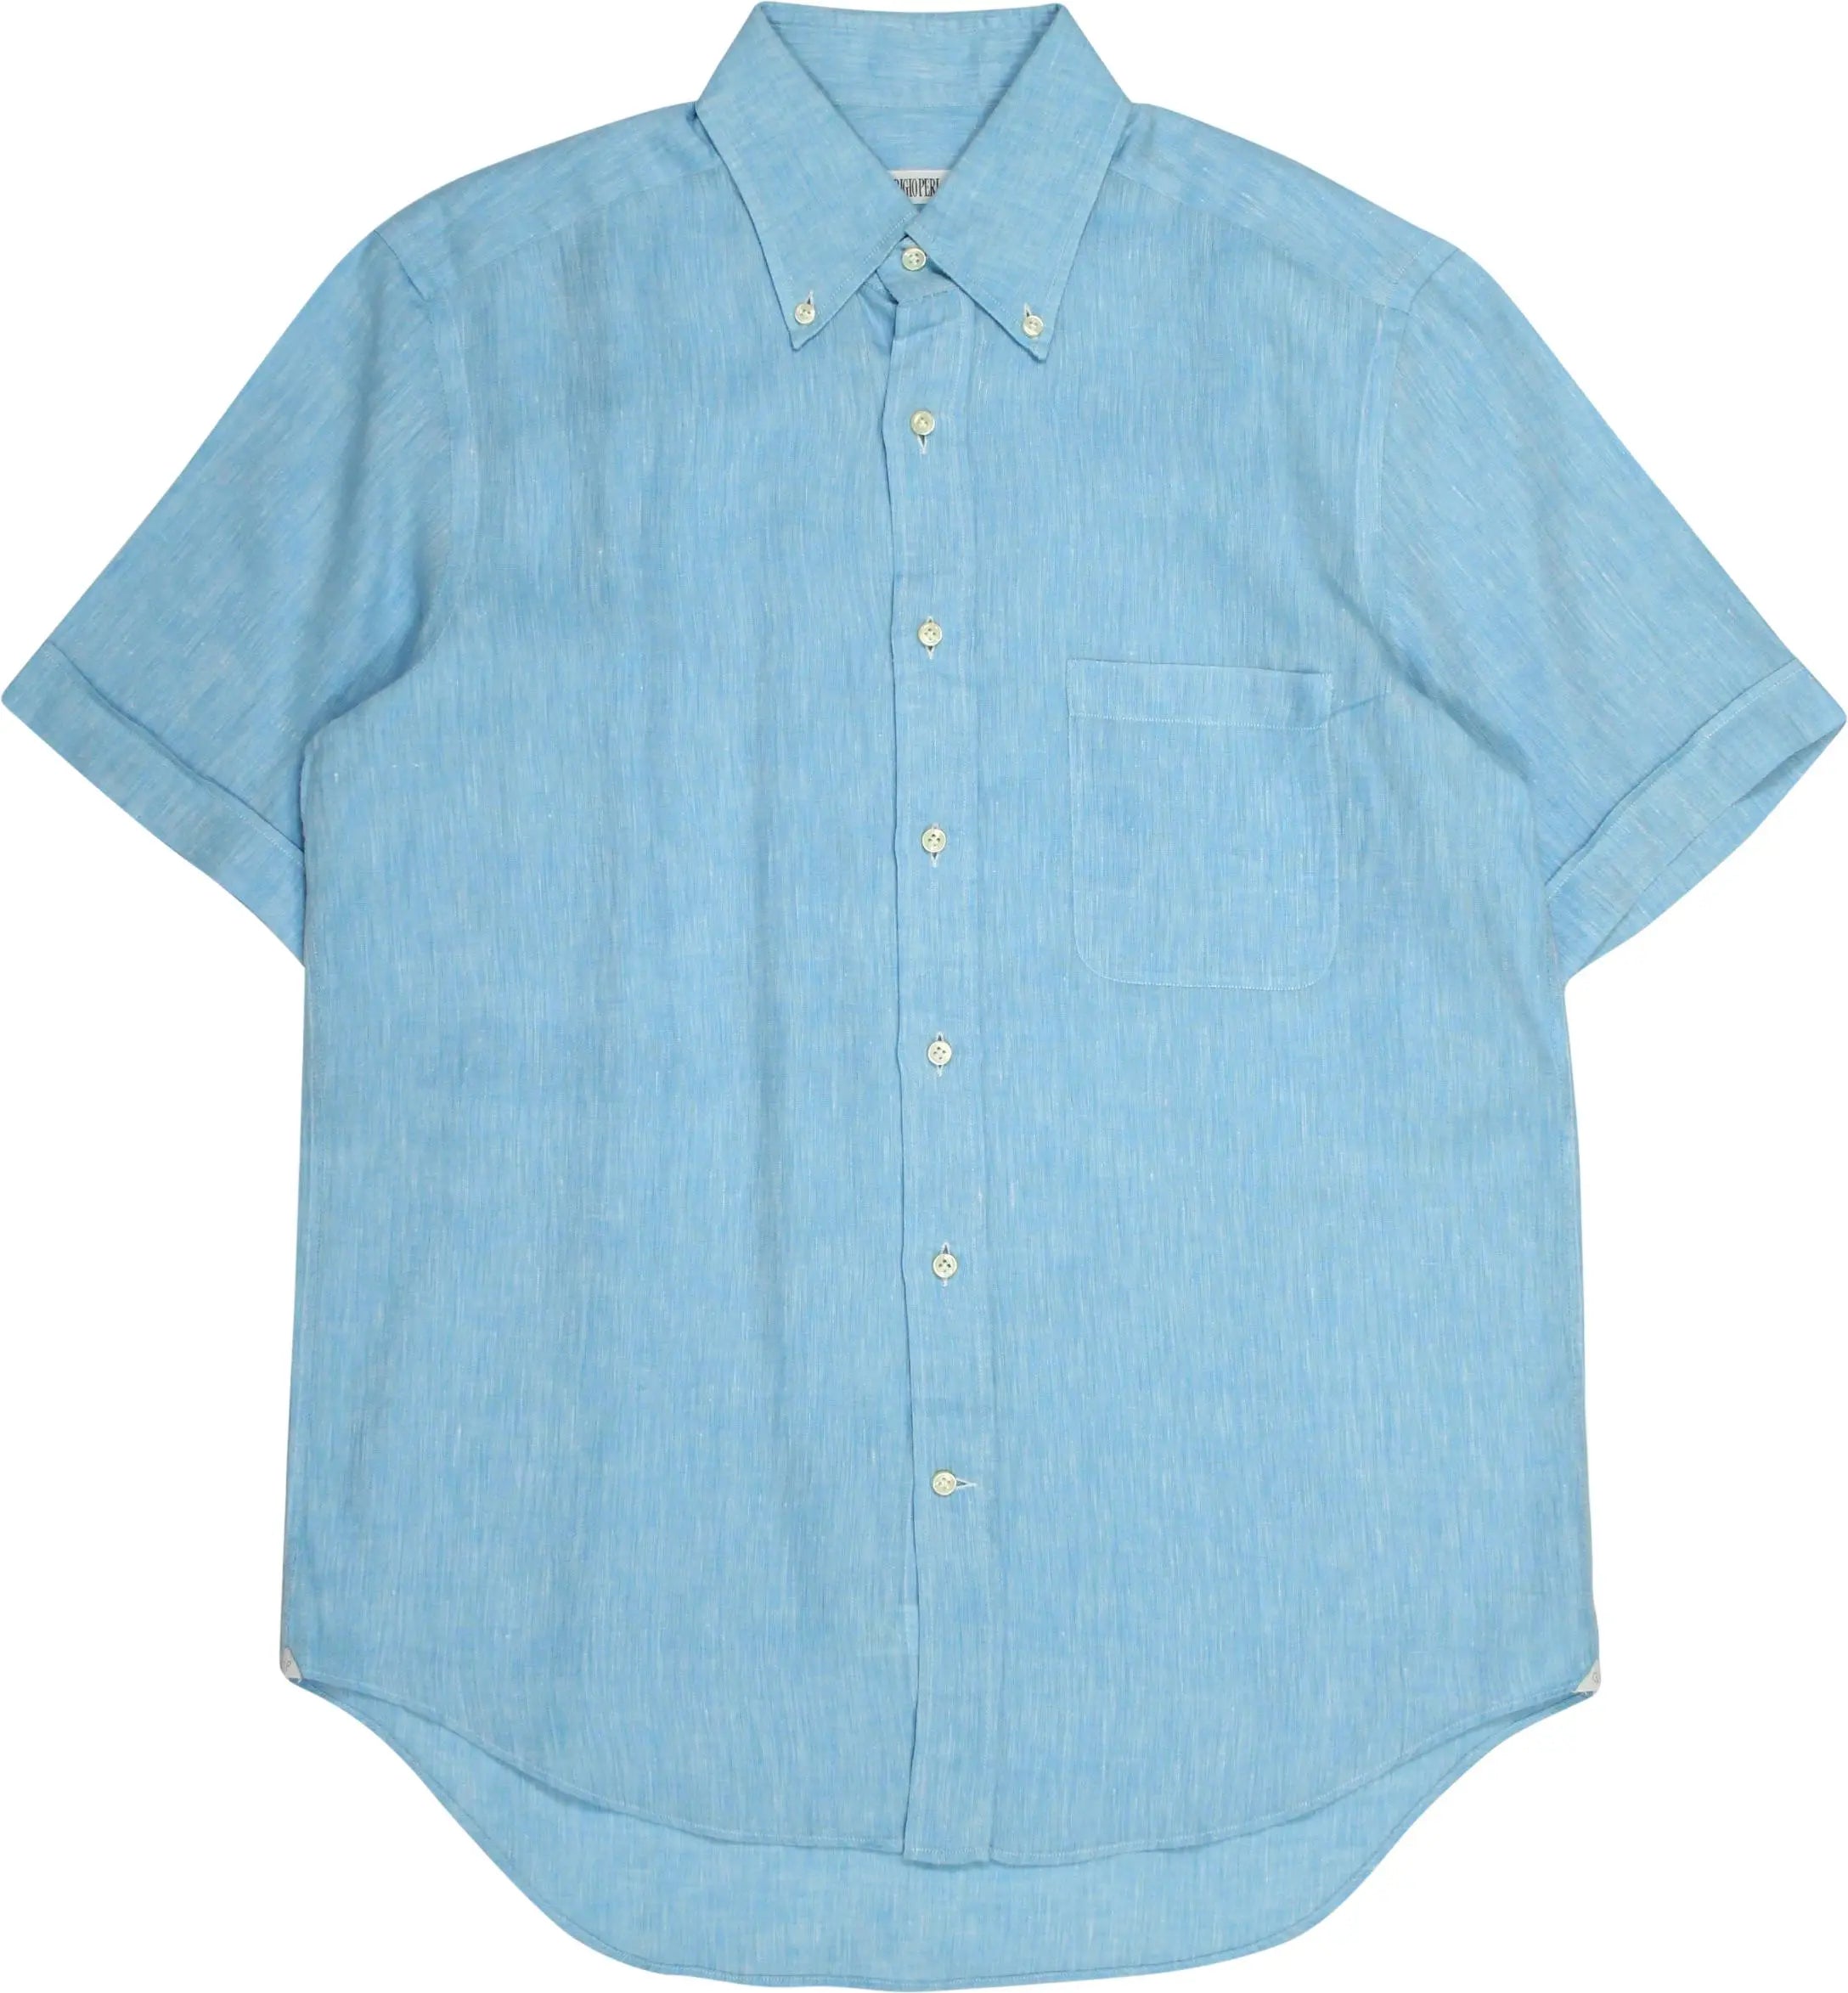 Grigioperla - Blue Short Sleeve Shirt by Grigioperla- ThriftTale.com - Vintage and second handclothing